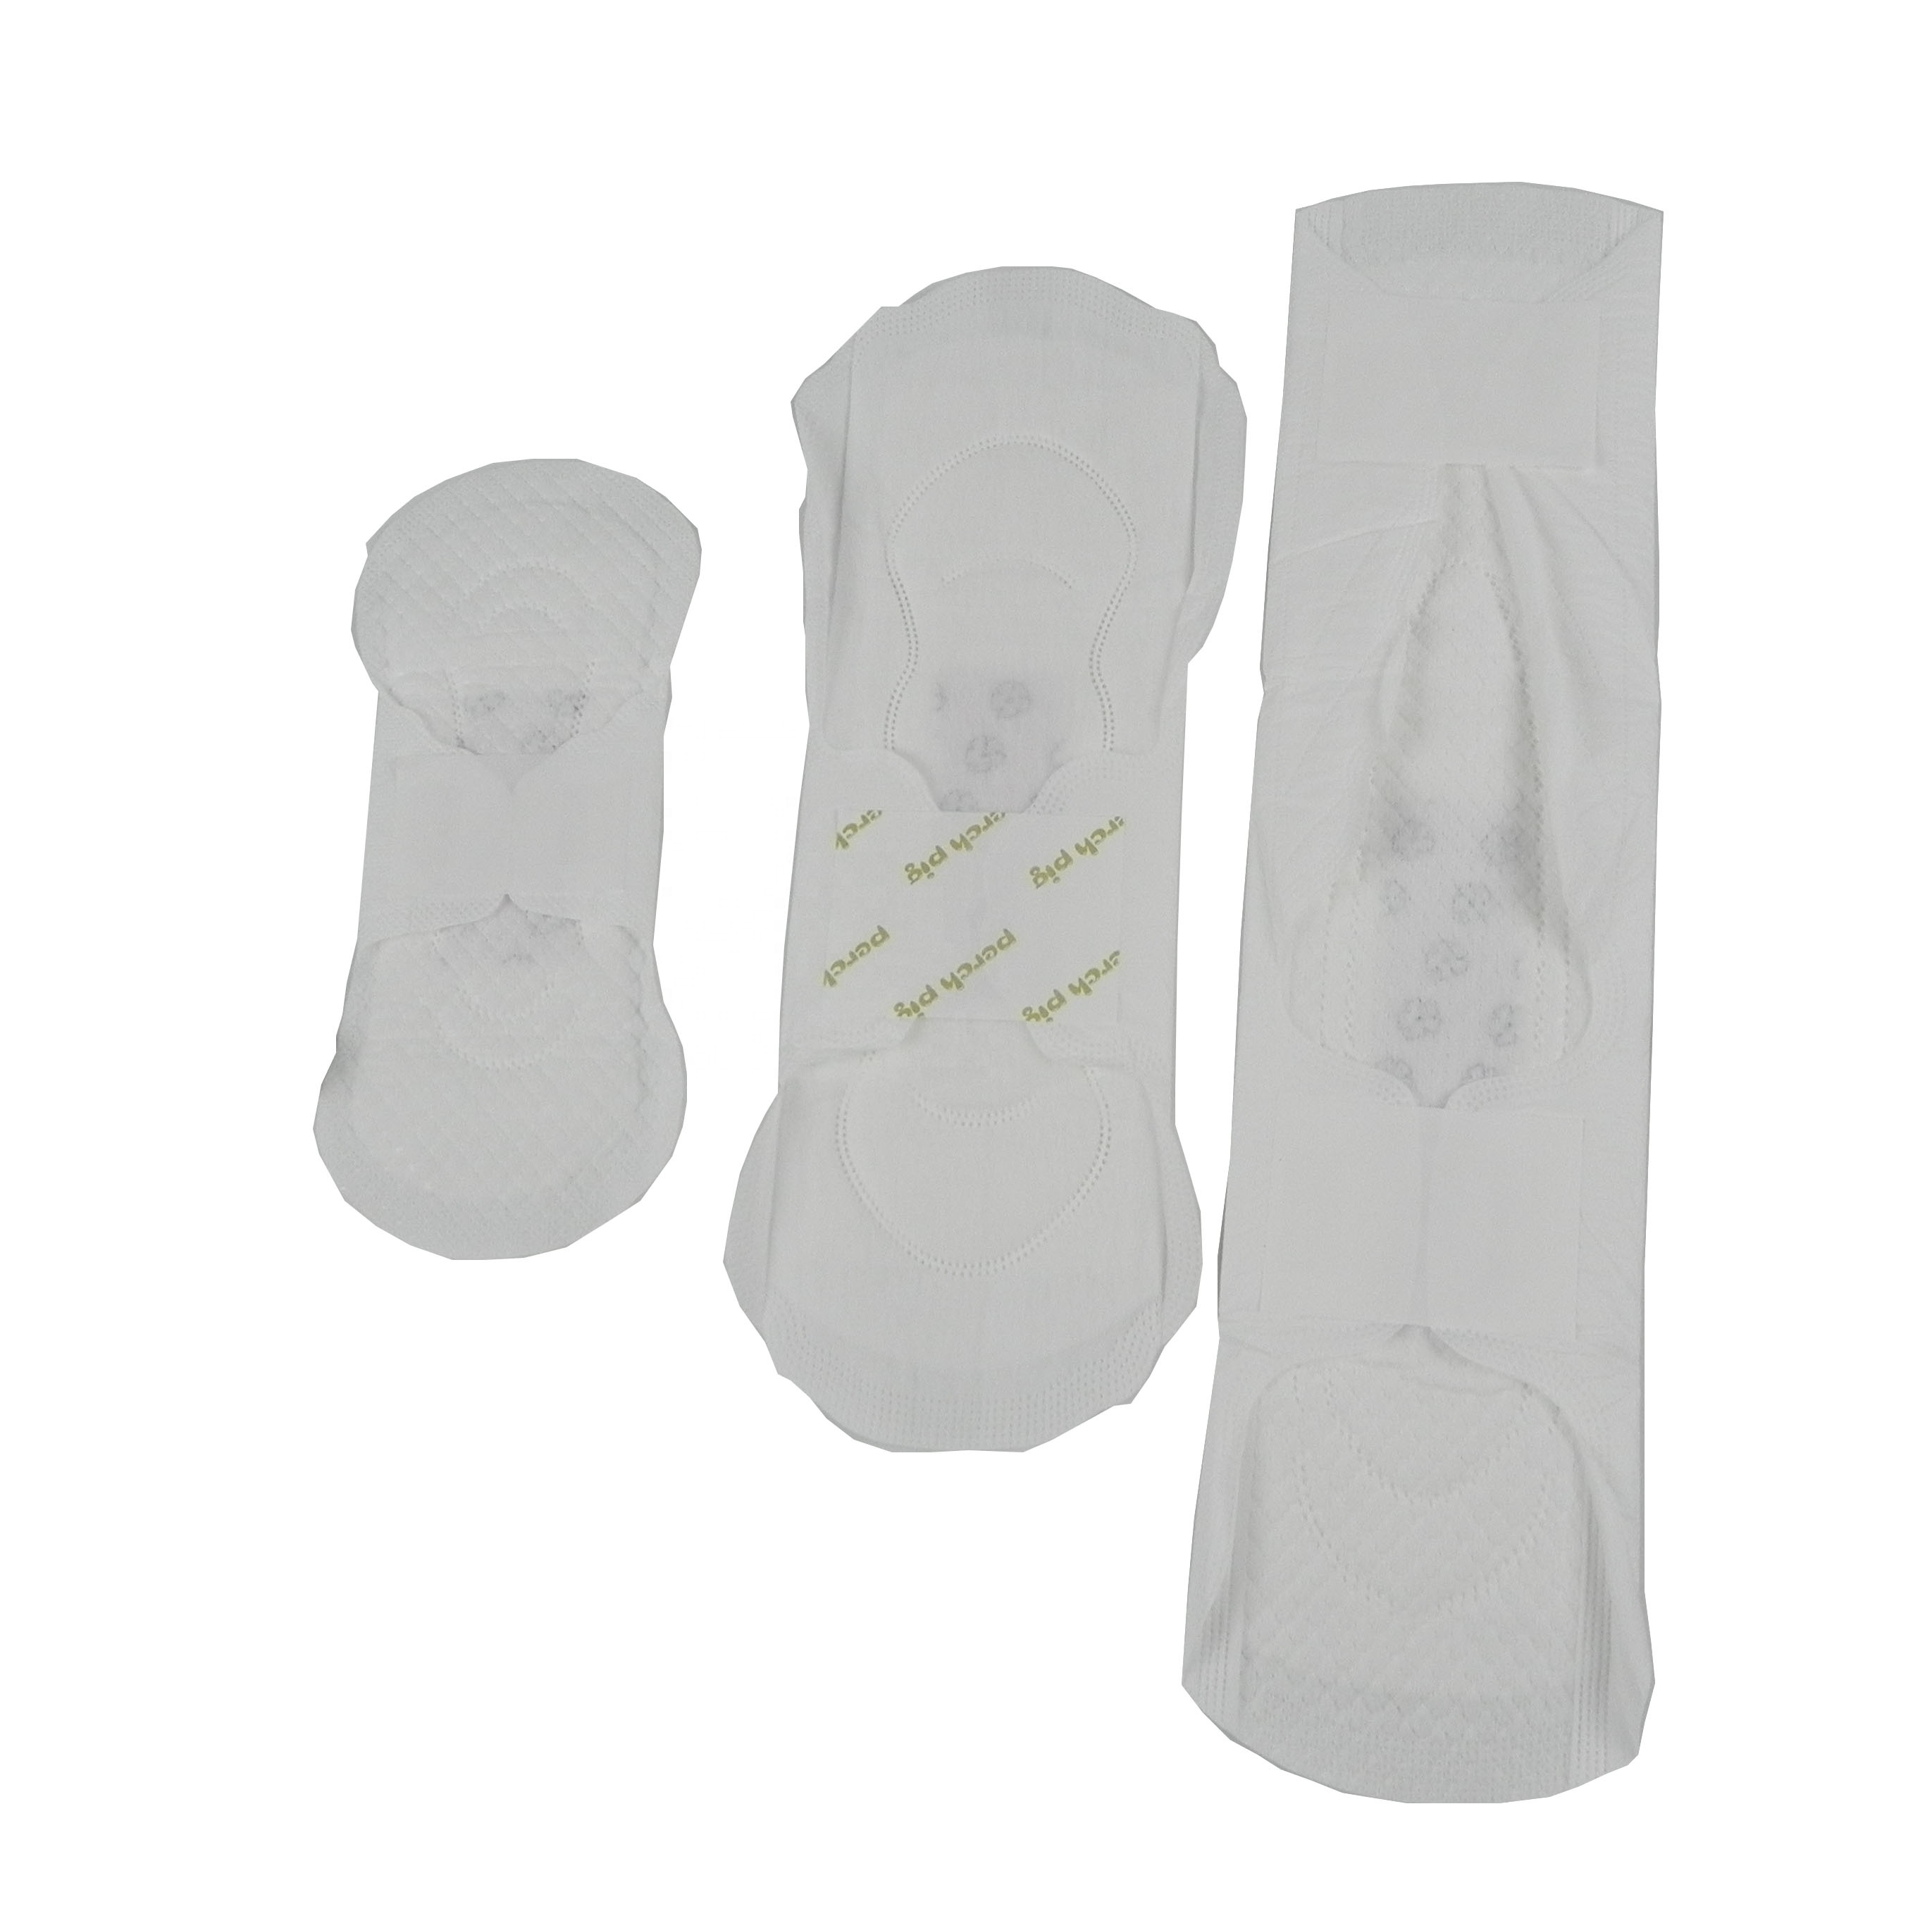 Hot sale Biodegradable Sanitary Napkins - free sample Cotton comfort softness Lady Pad – Yoho